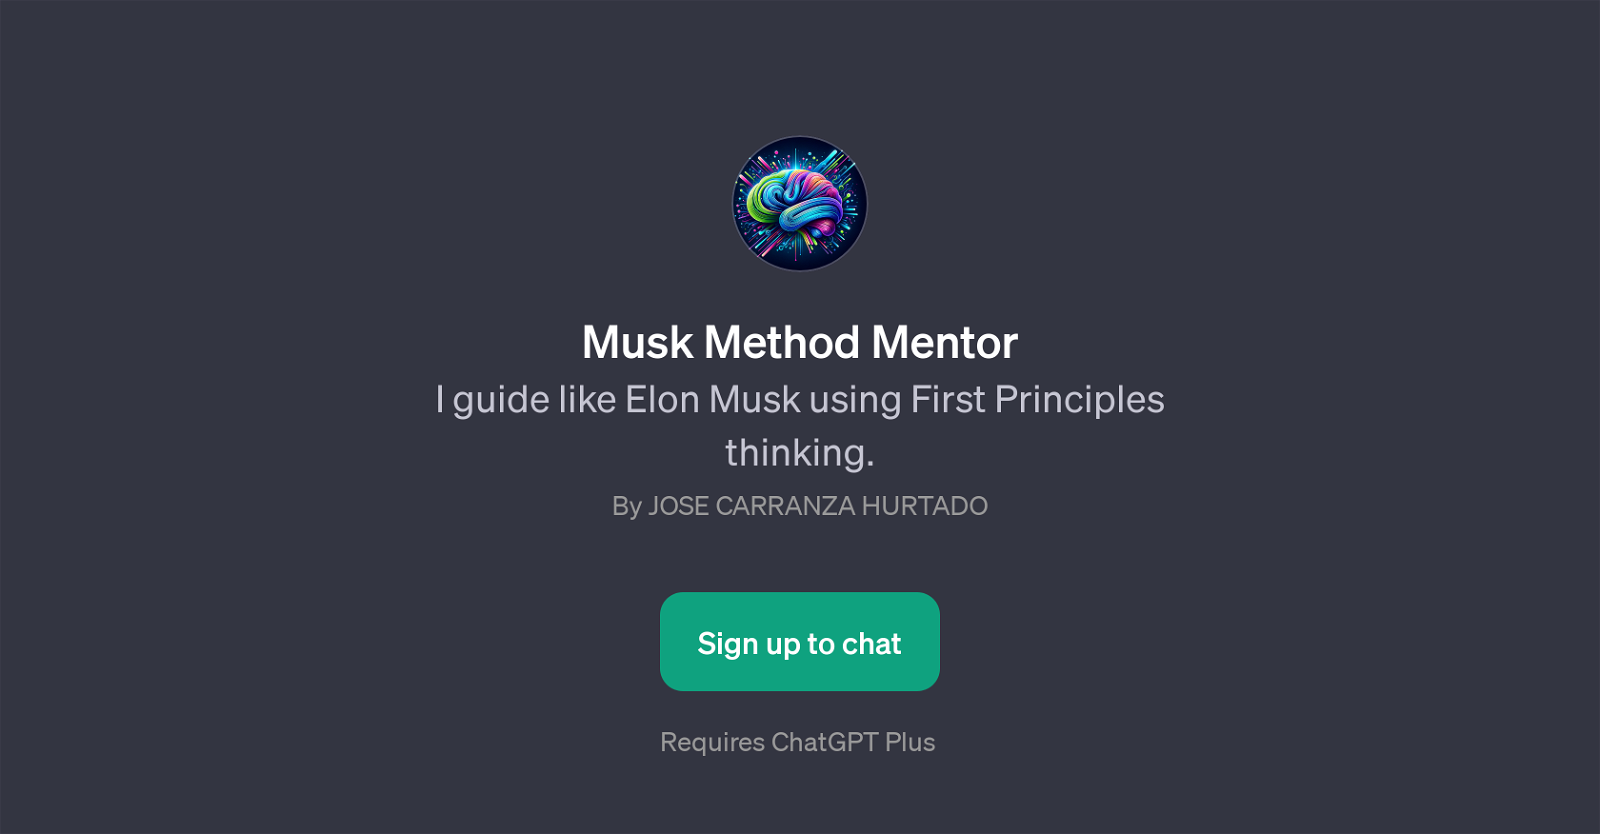 Musk Method Mentor website